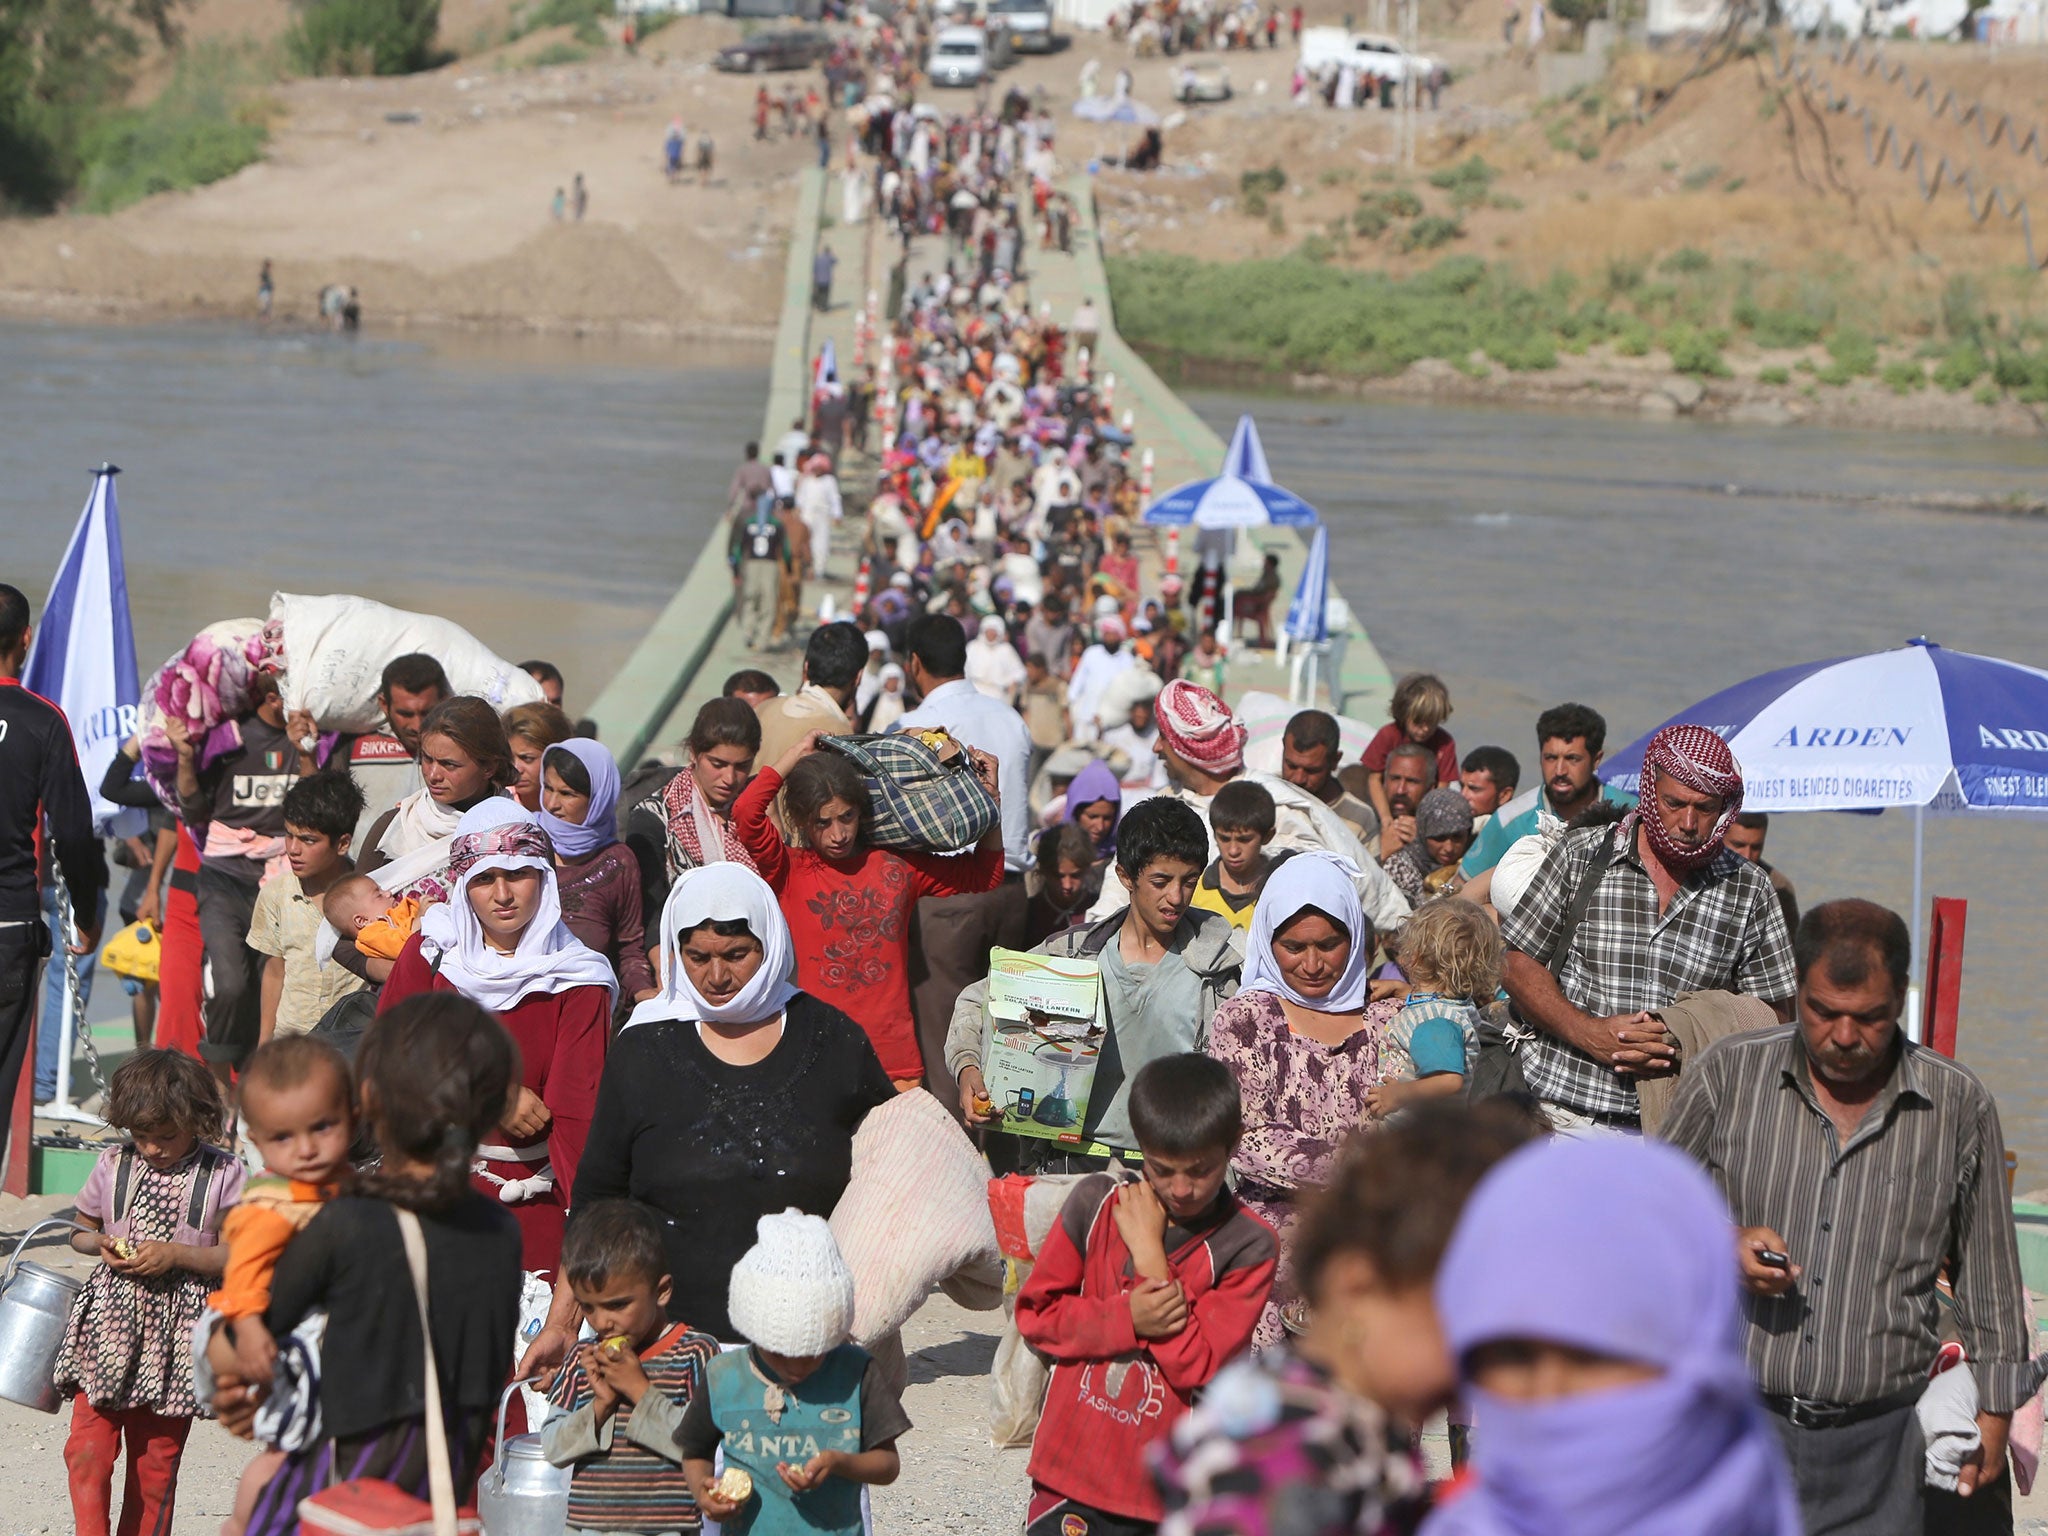 Displaced Iraqis from the Yazidi community cross the Syrian-Iraqi border along the Fishkhabur bridge over the Tigris River at the Fishkhabur crossing, in northern Iraq, on August 13, 2014.